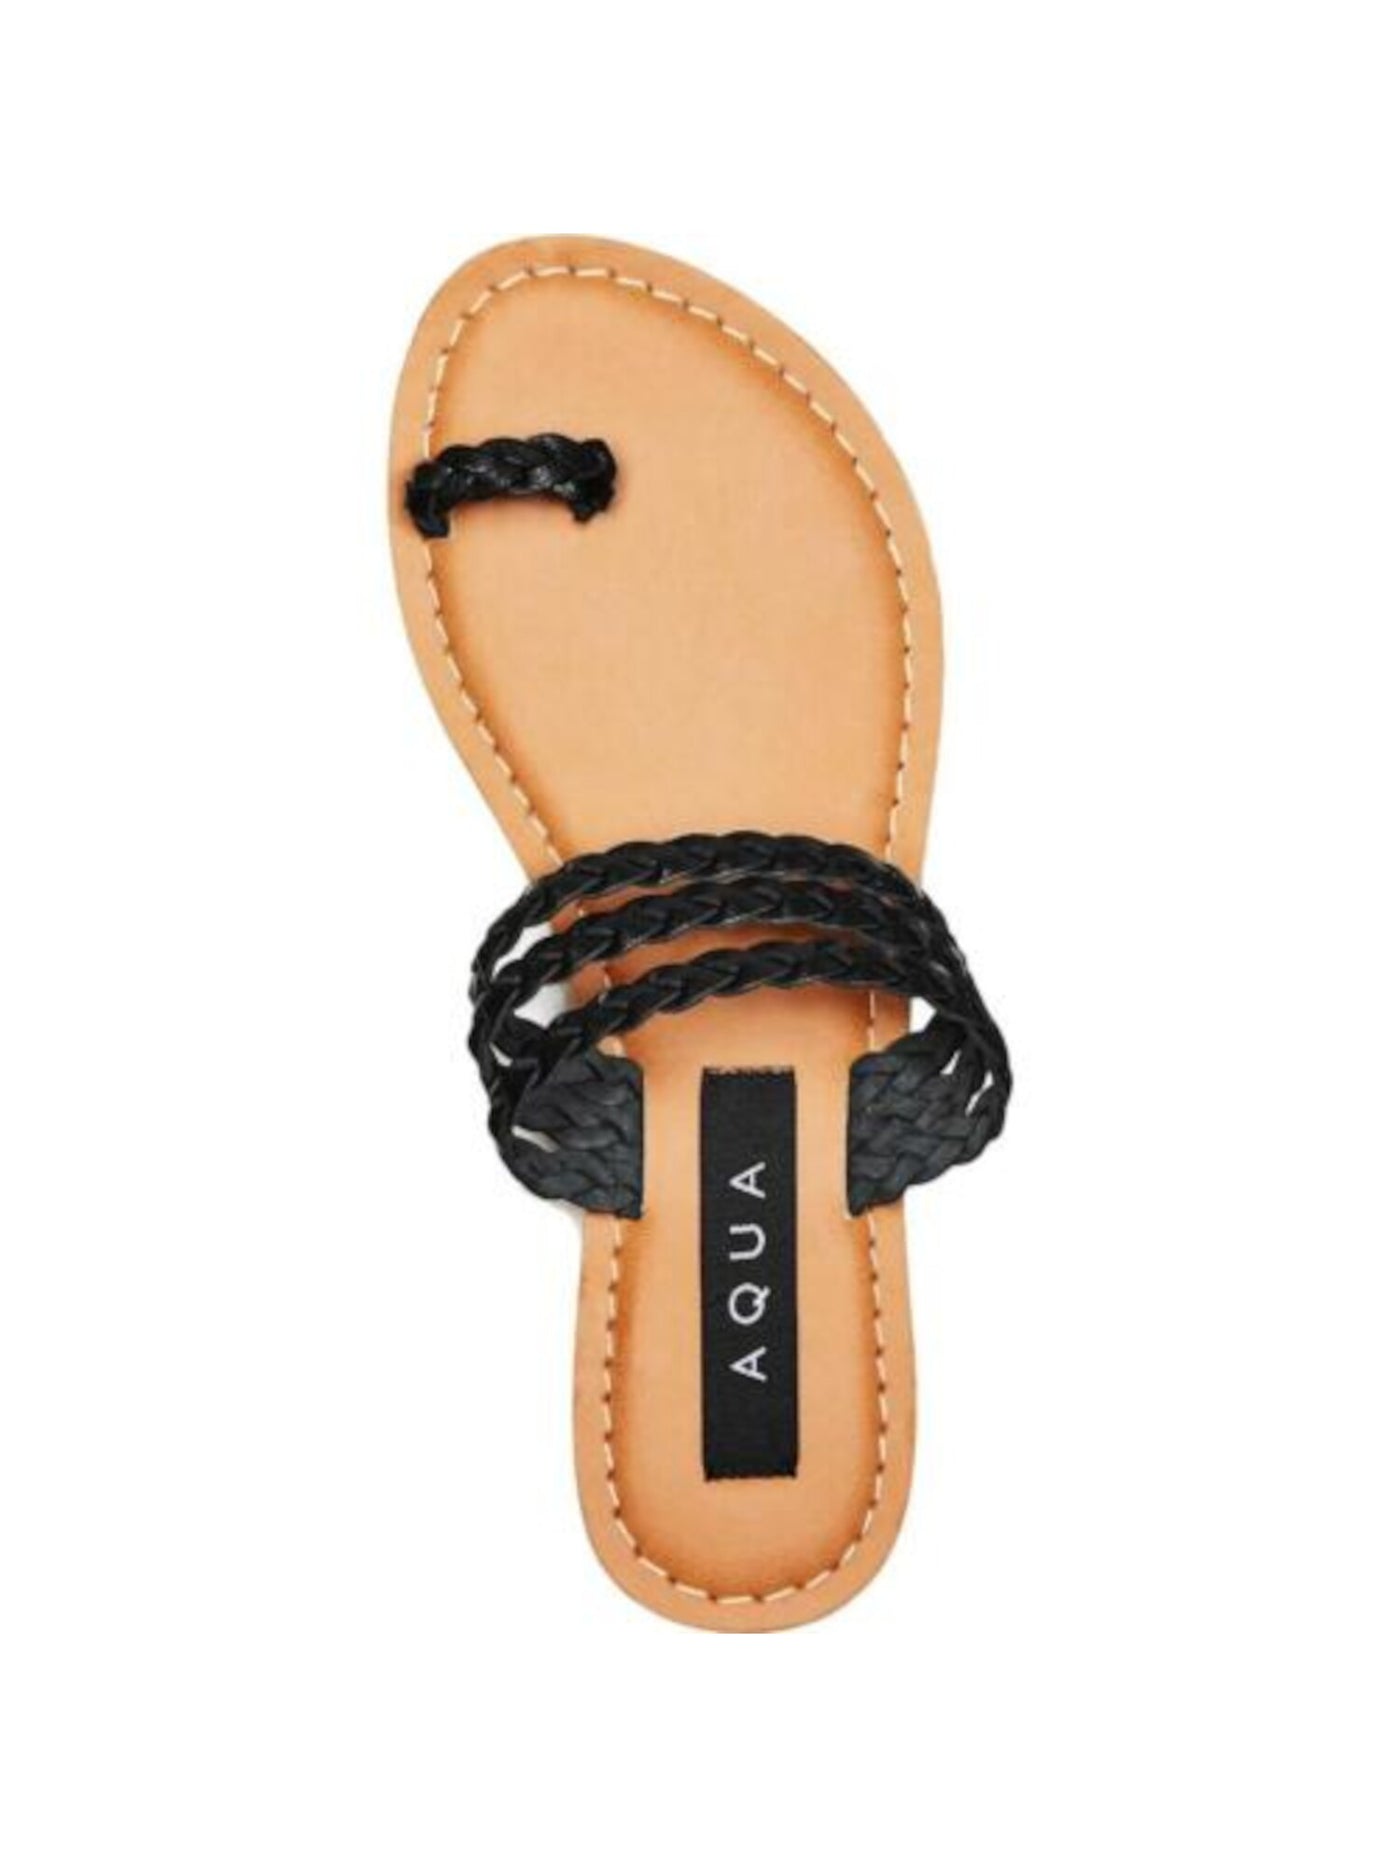 AQUA Womens Black Toe-Loop Cushioned Braided Slay Open Toe Slip On Leather Slide Sandals Shoes 9.5 M